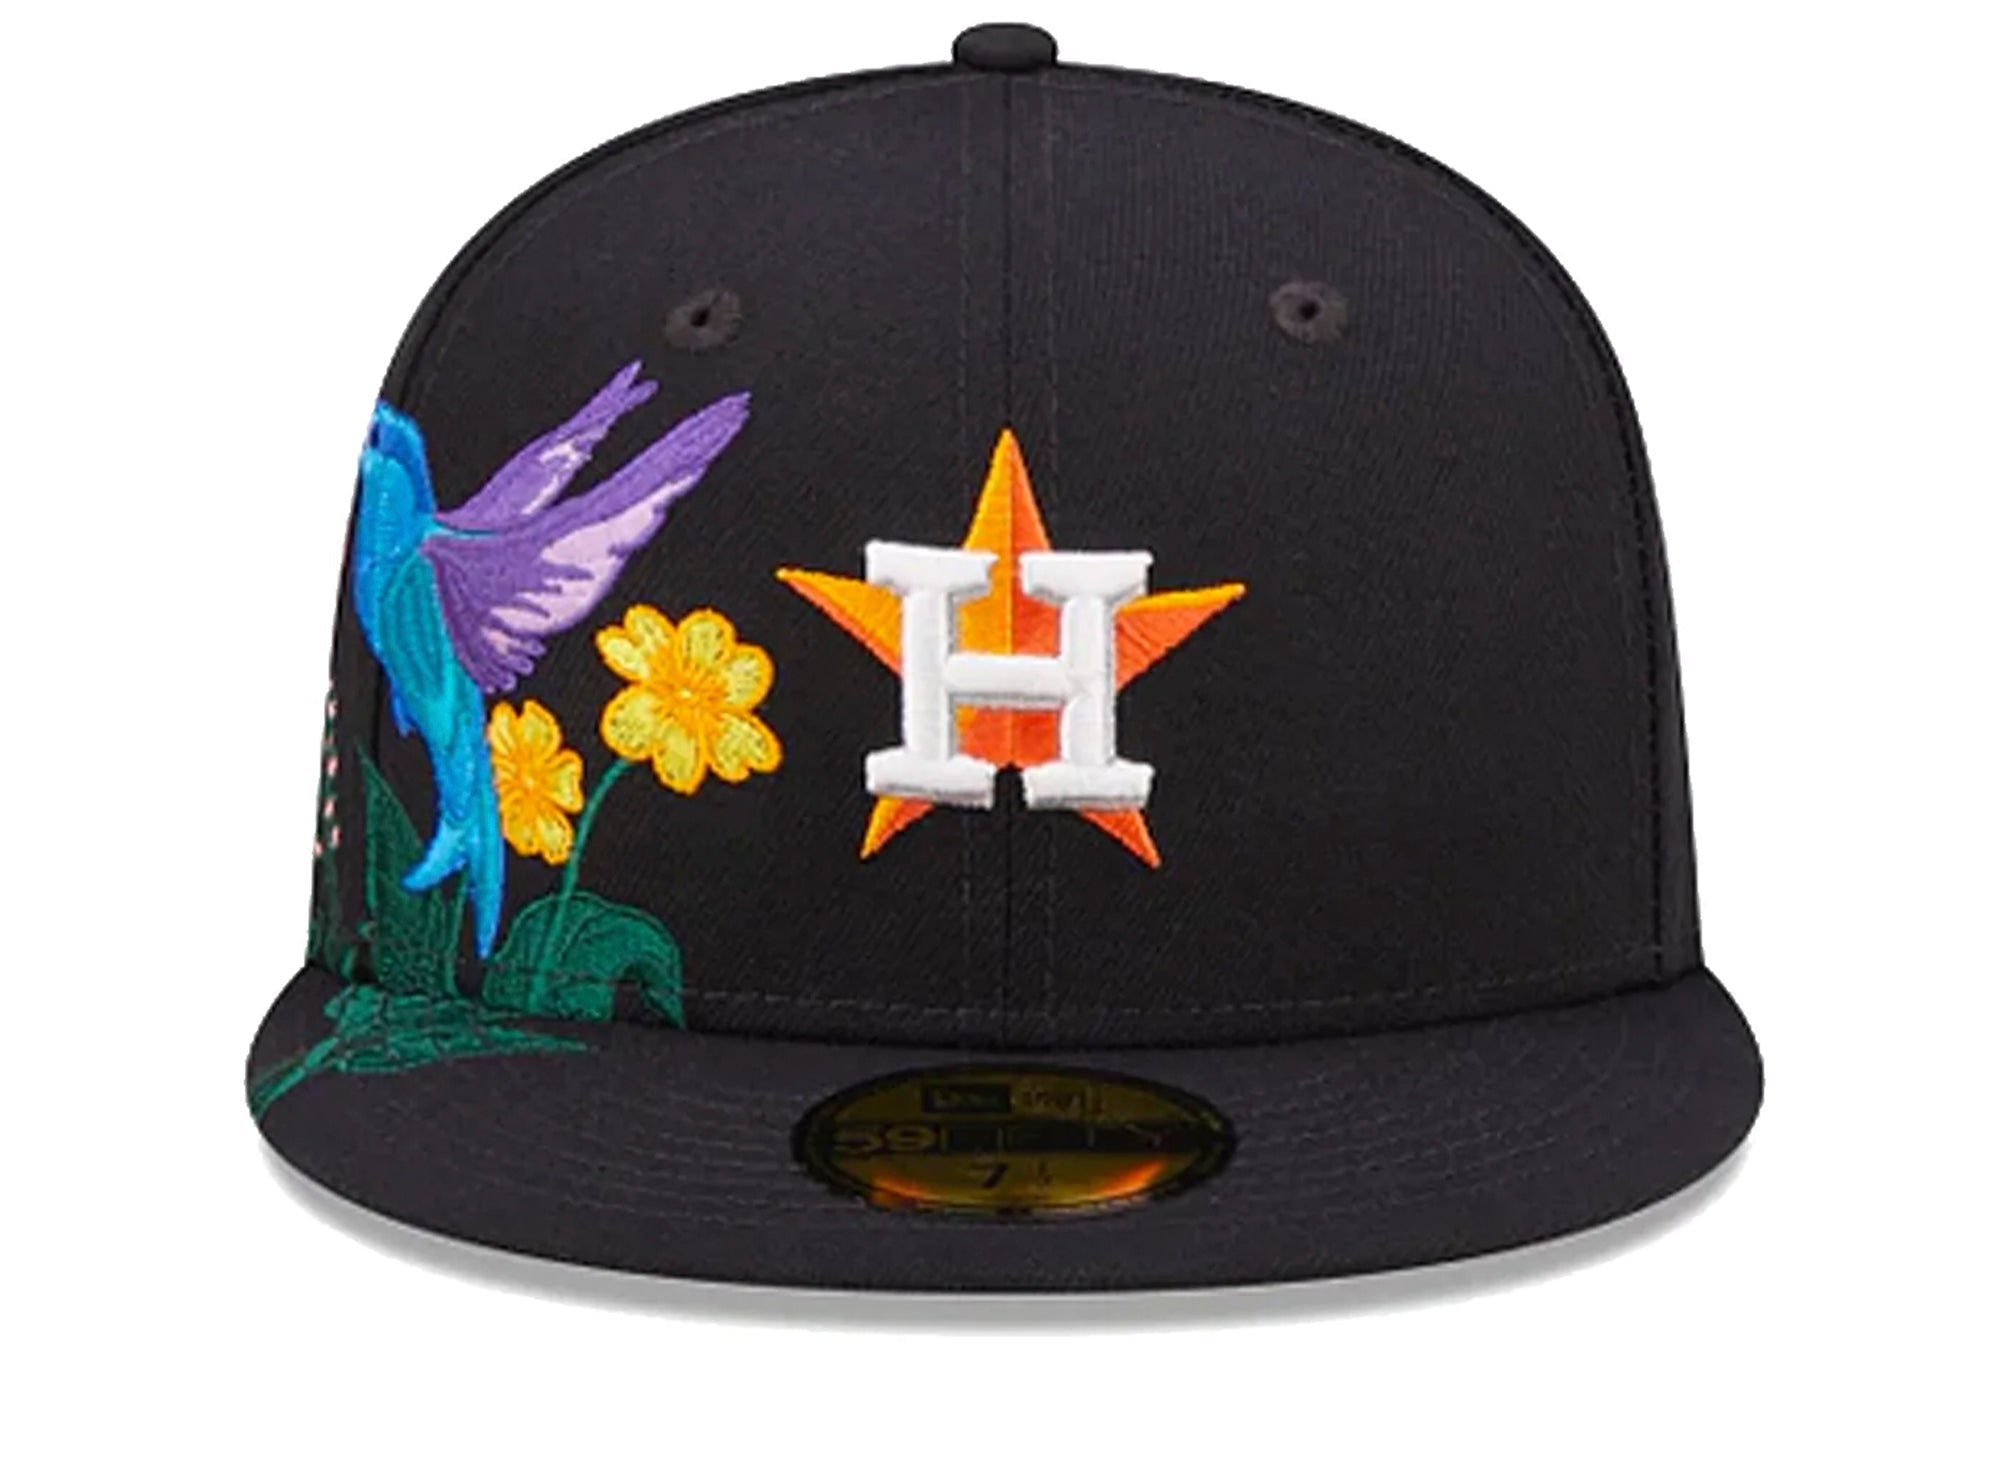 Houston Astros Blooming Baseballs Shirt